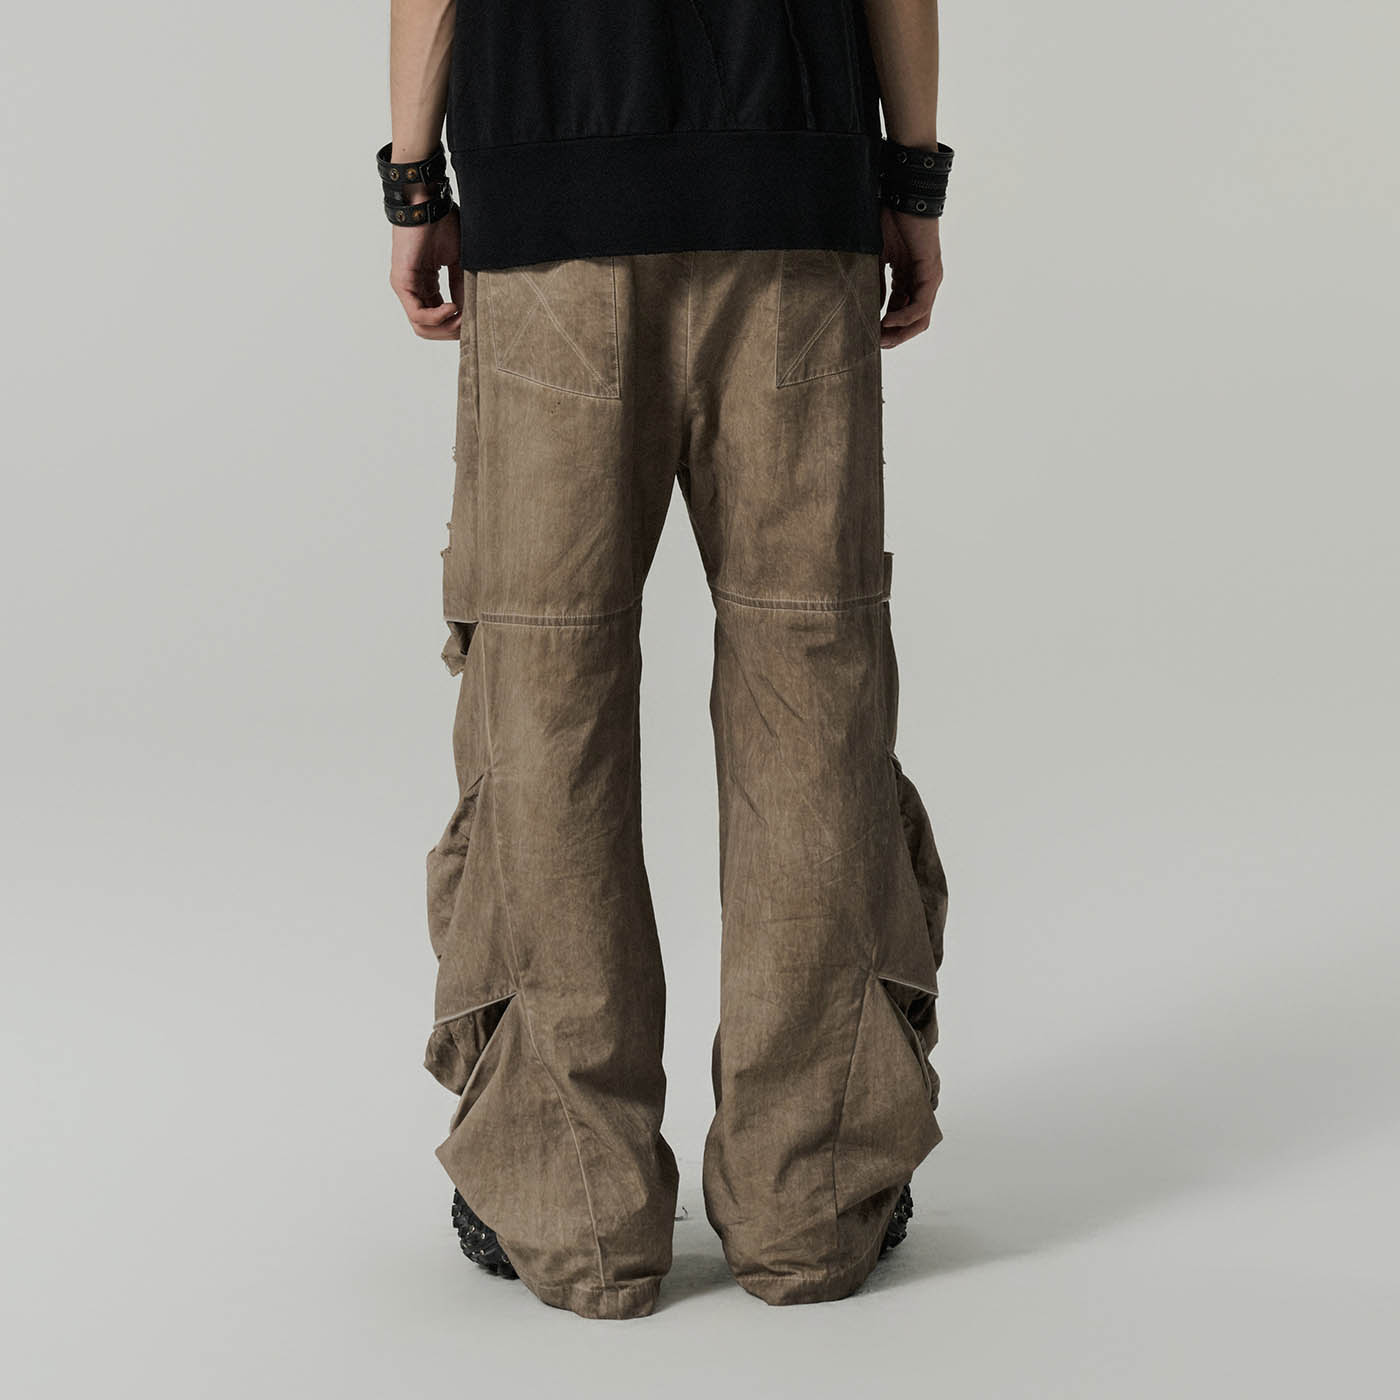 FLYERRER Distressed Knee-Pocket Zipper Pants, premium urban and streetwear designers apparel on PROJECTISR.com, FLYERRER